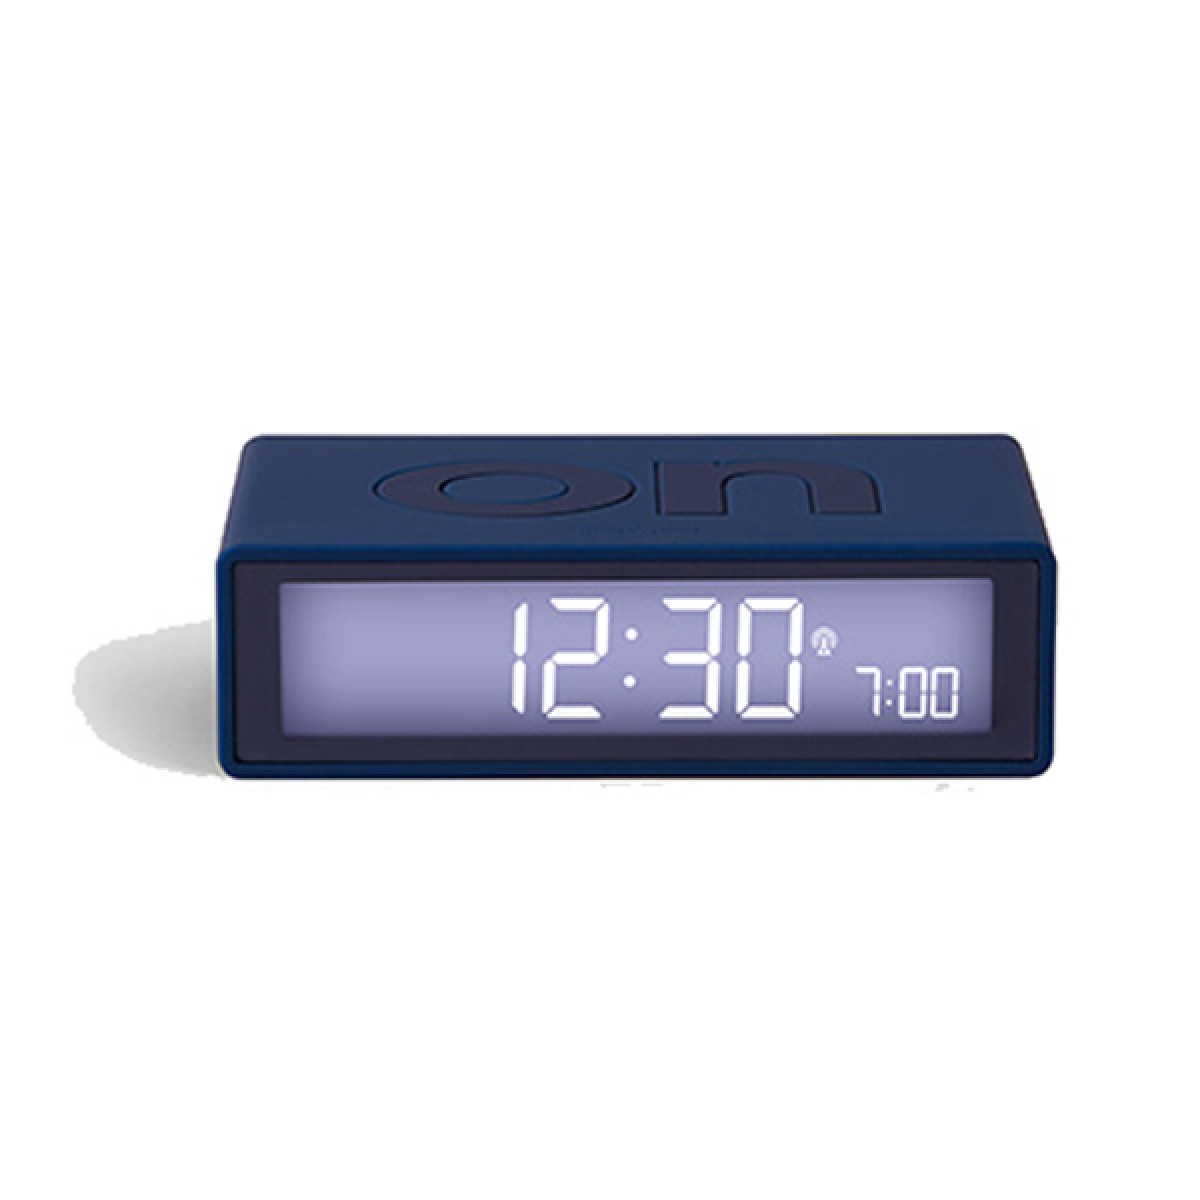 Lexon - Flip - Reversible LCD alarm clock - Dark Blue